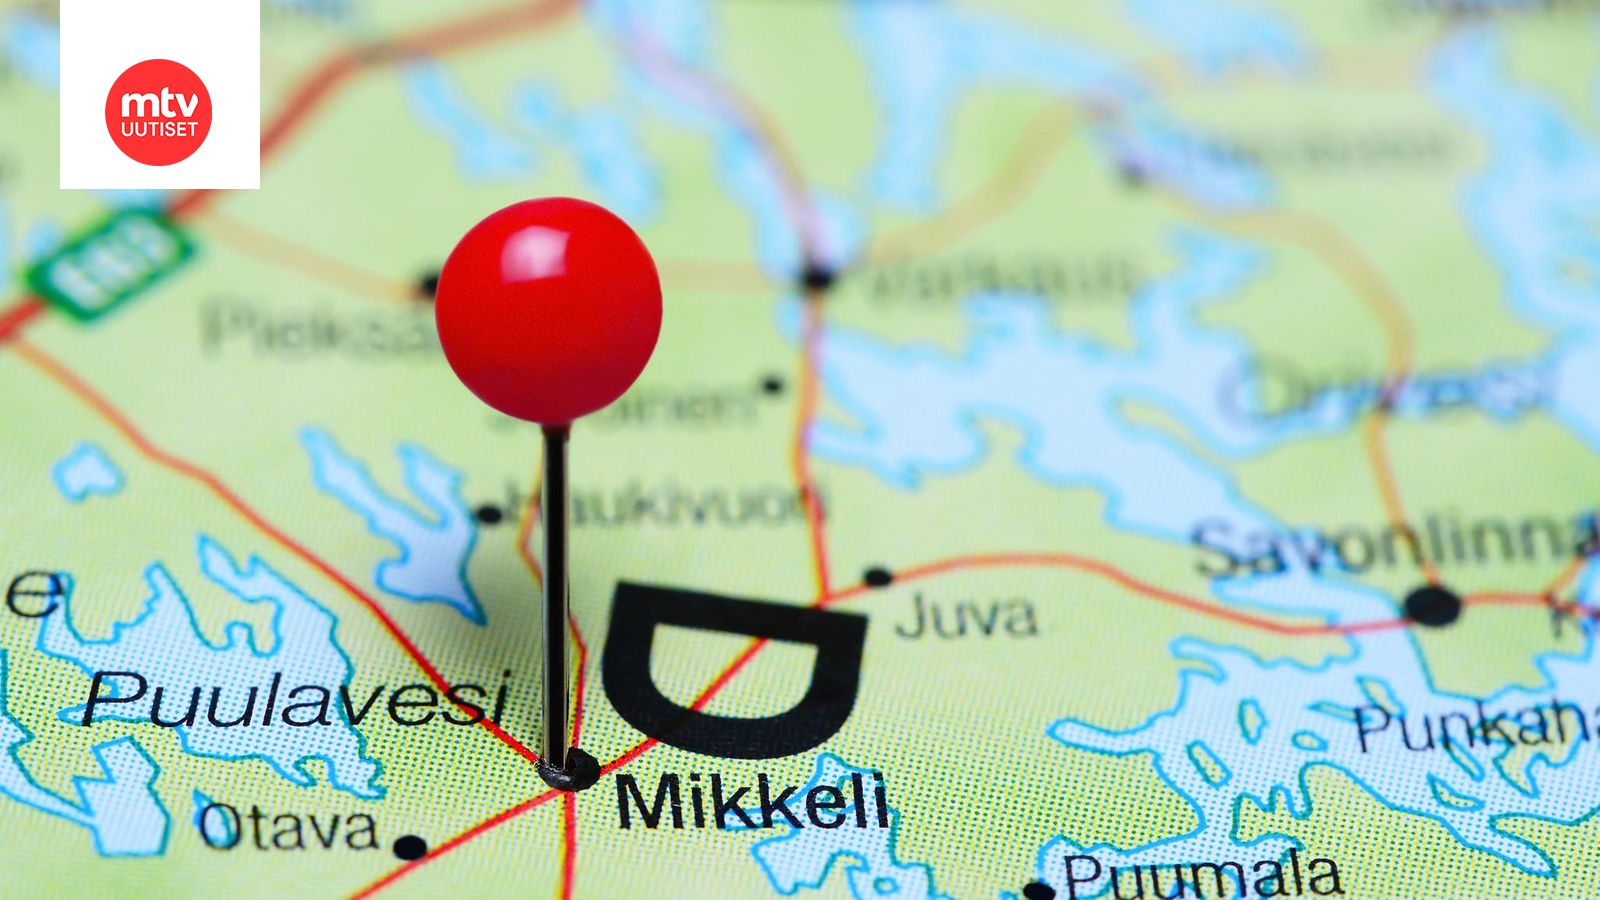 Iltalehti fi. Миккели на карте. Otava, Finland.